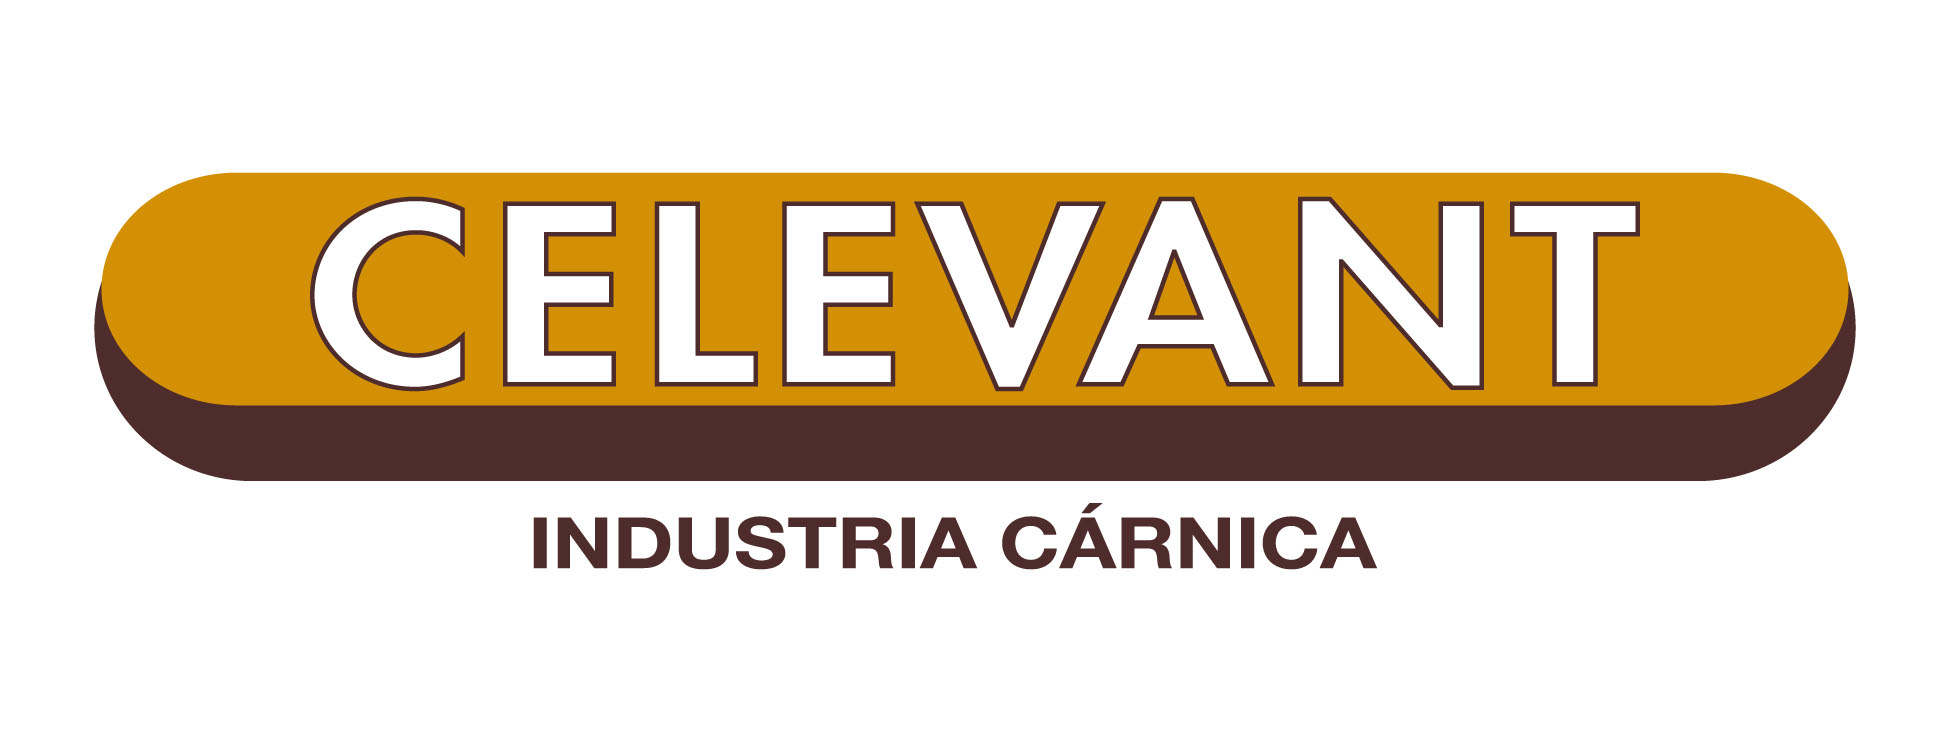 Celevant logo - CELEVANT